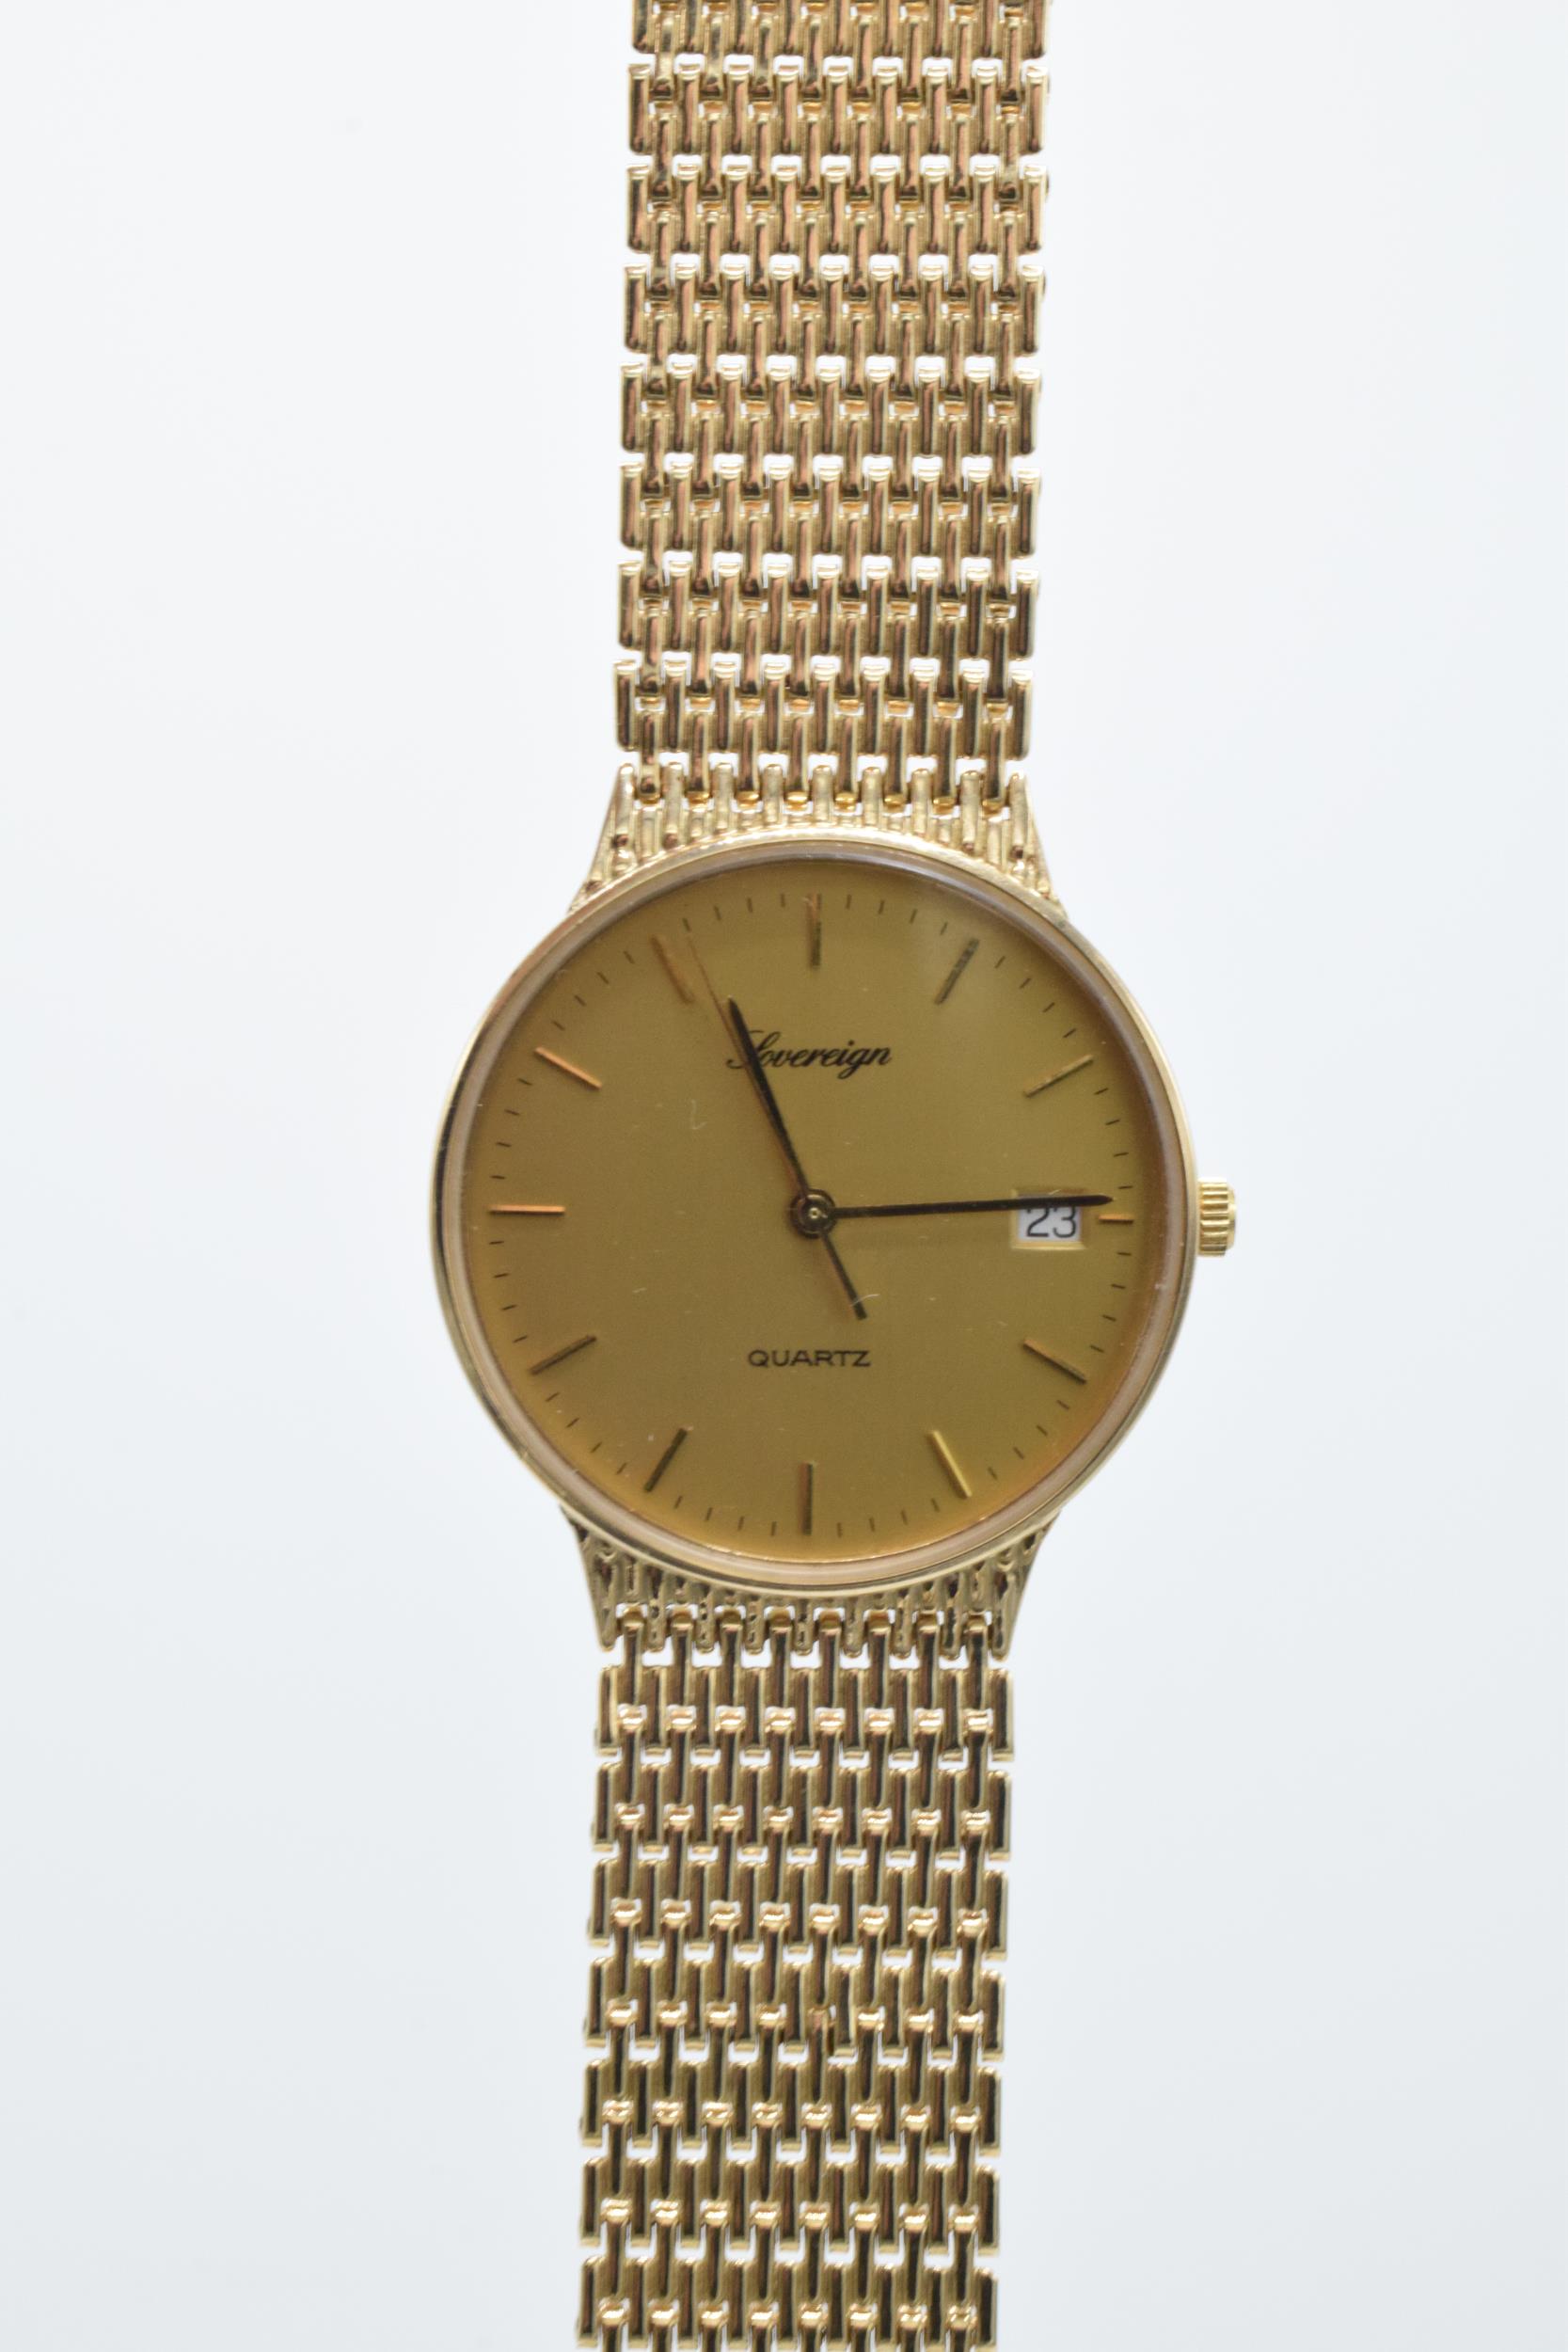 9ct gold gentleman's 'Sovereign' wristwatch on 9ct gold strap, 33mm, with date, Quartz movement,